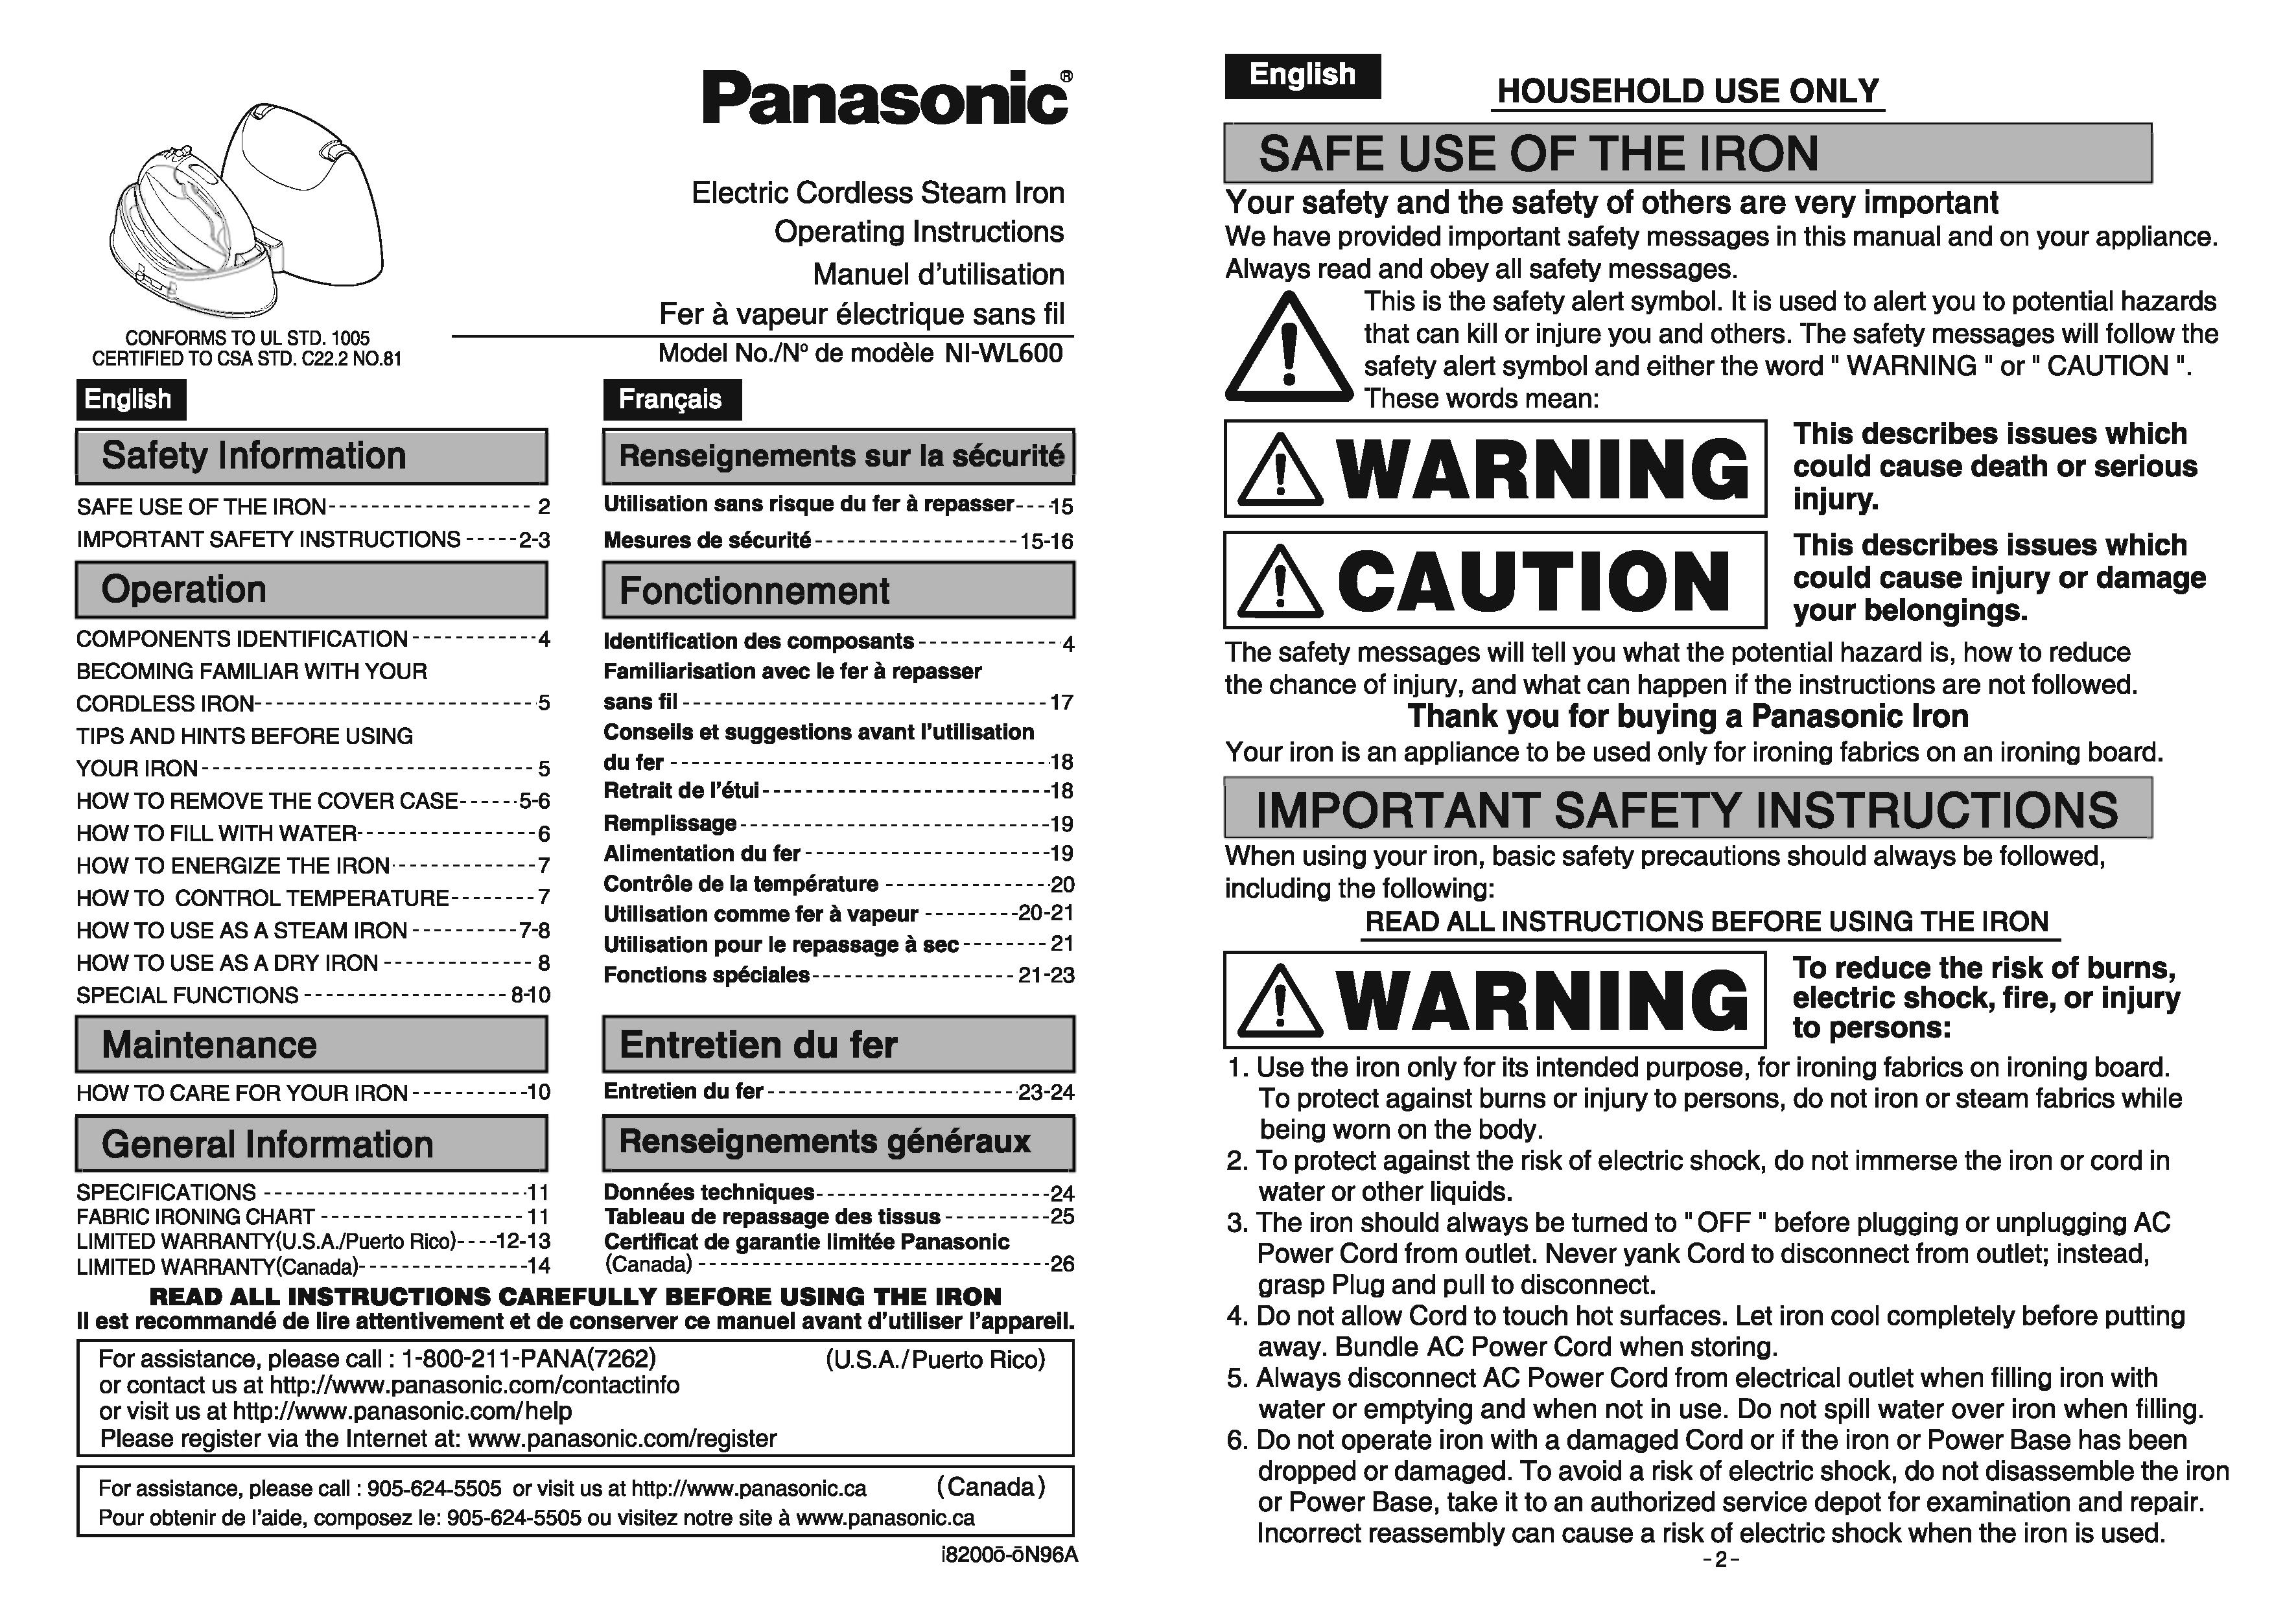 Panasonic NIWL600 Iron User Manual